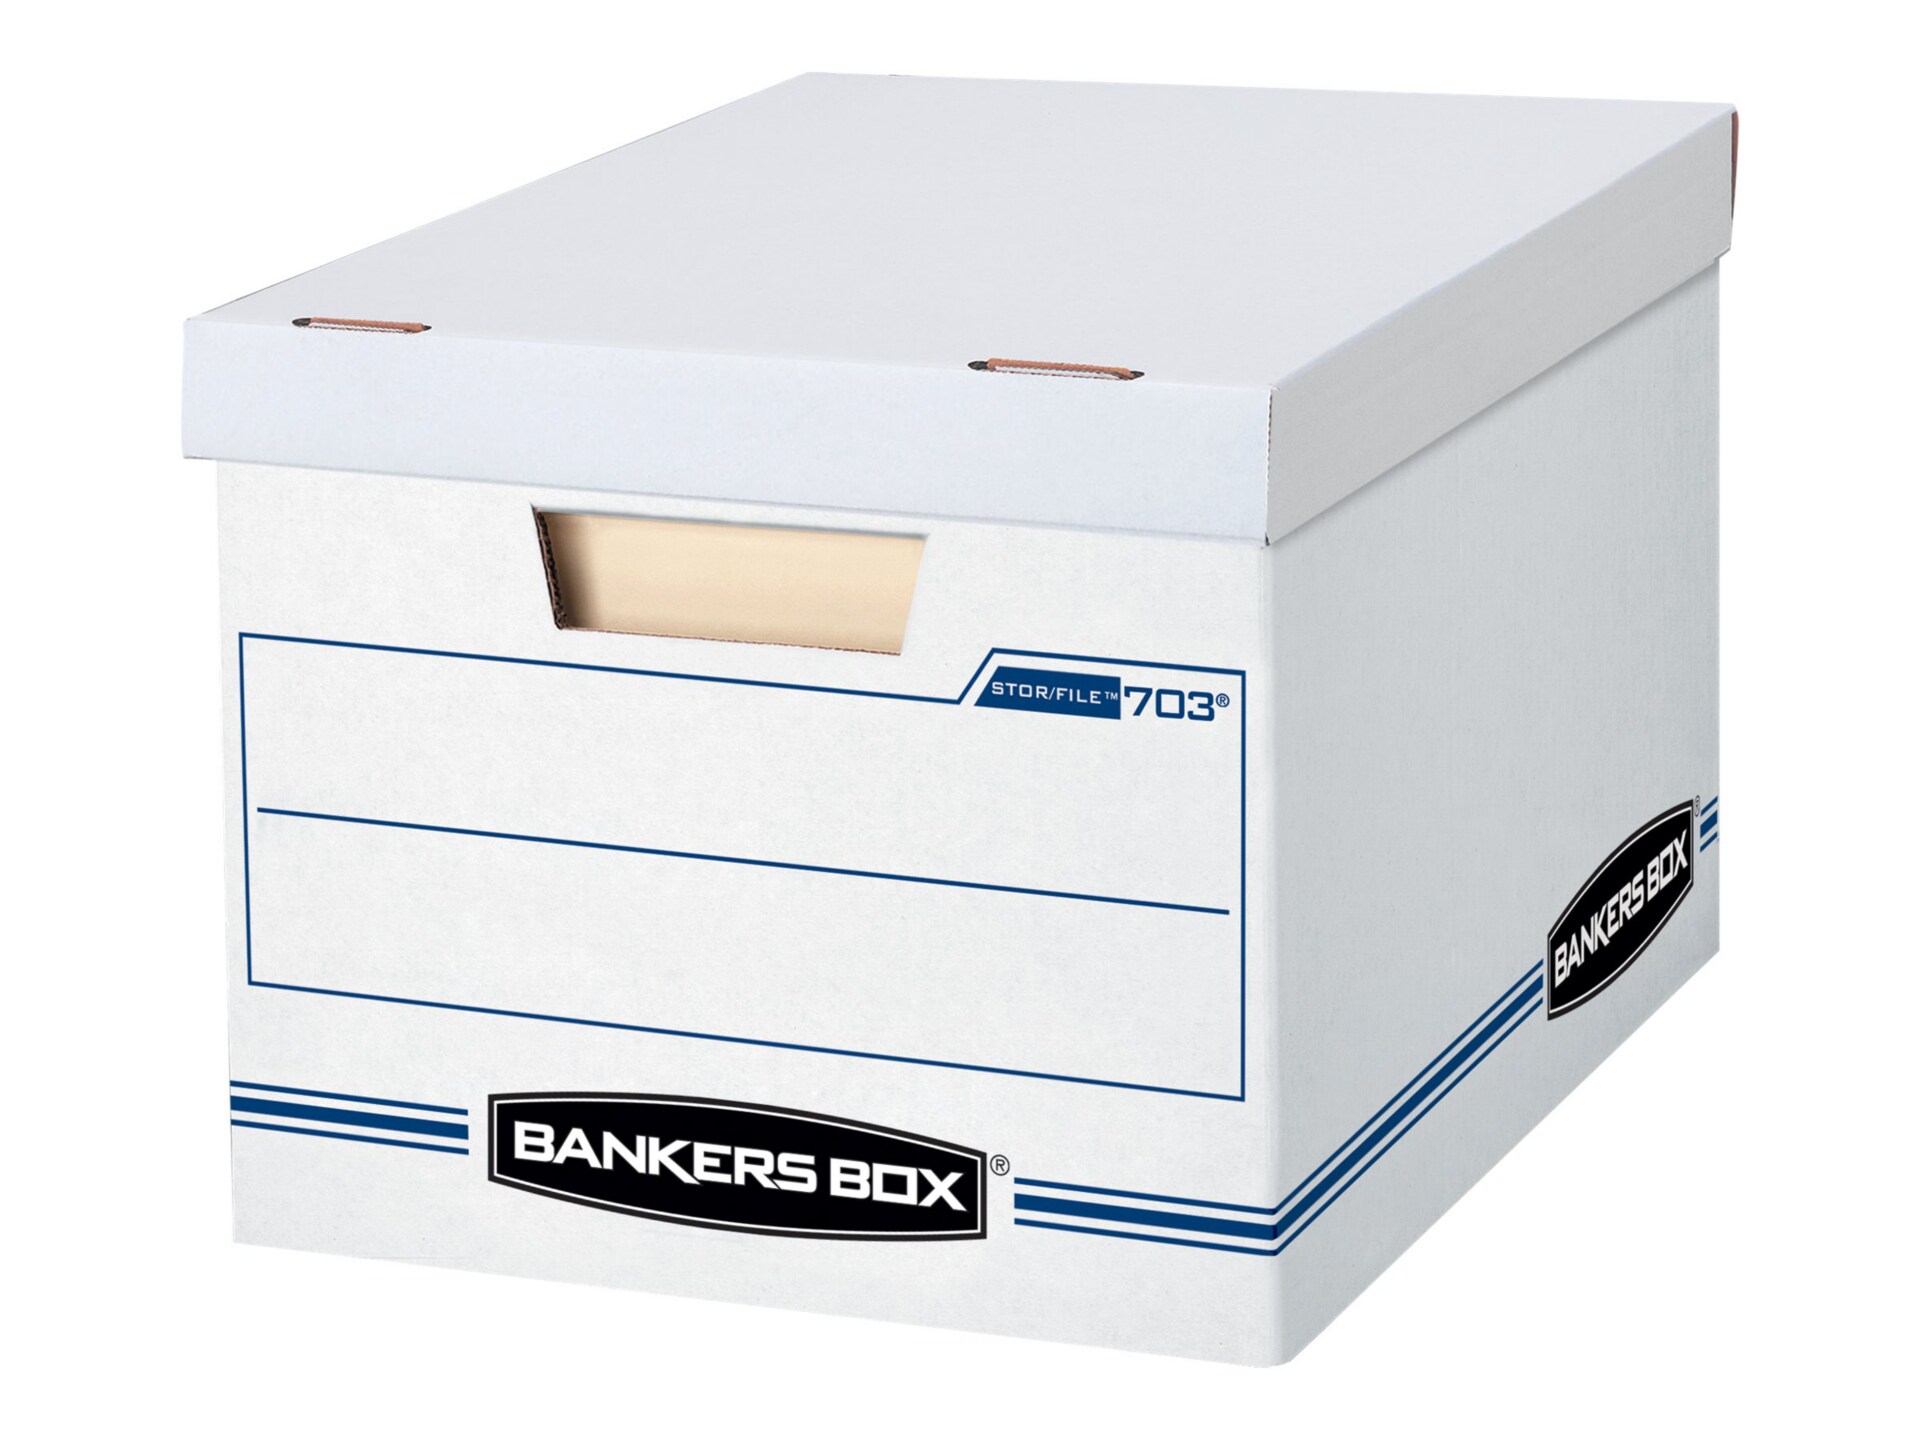 Bankers Box Stor/File Basic-Duty - storage box